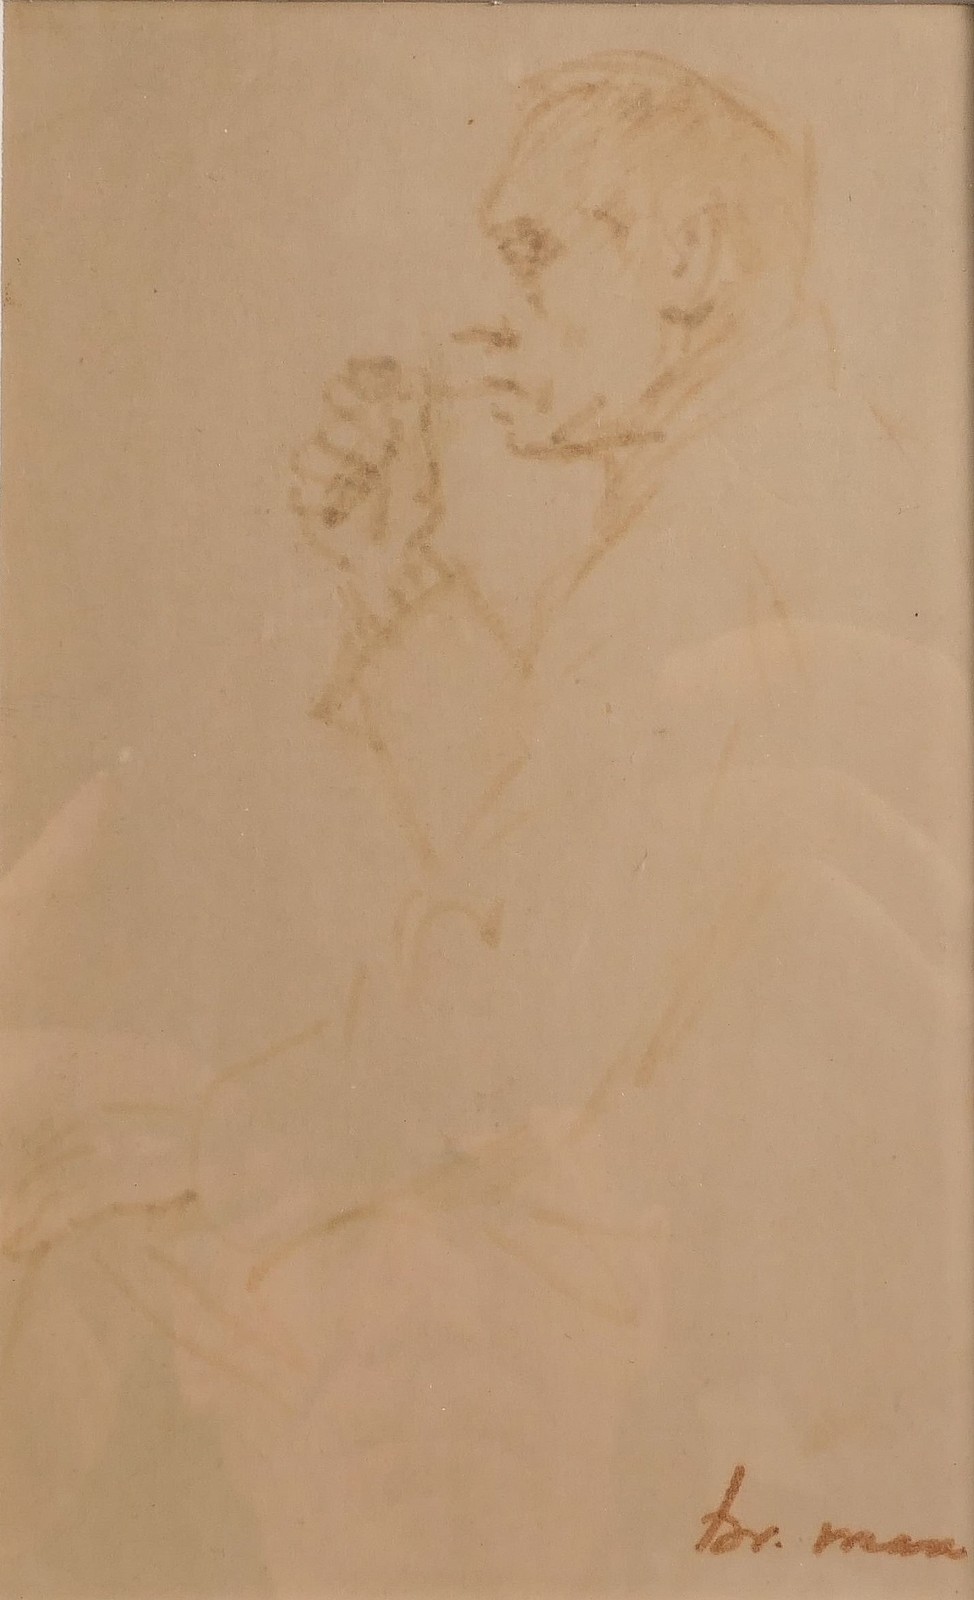 Max Br., portrait of a man, bistre on paper, 8 x 13 cm - Image 5 of 7